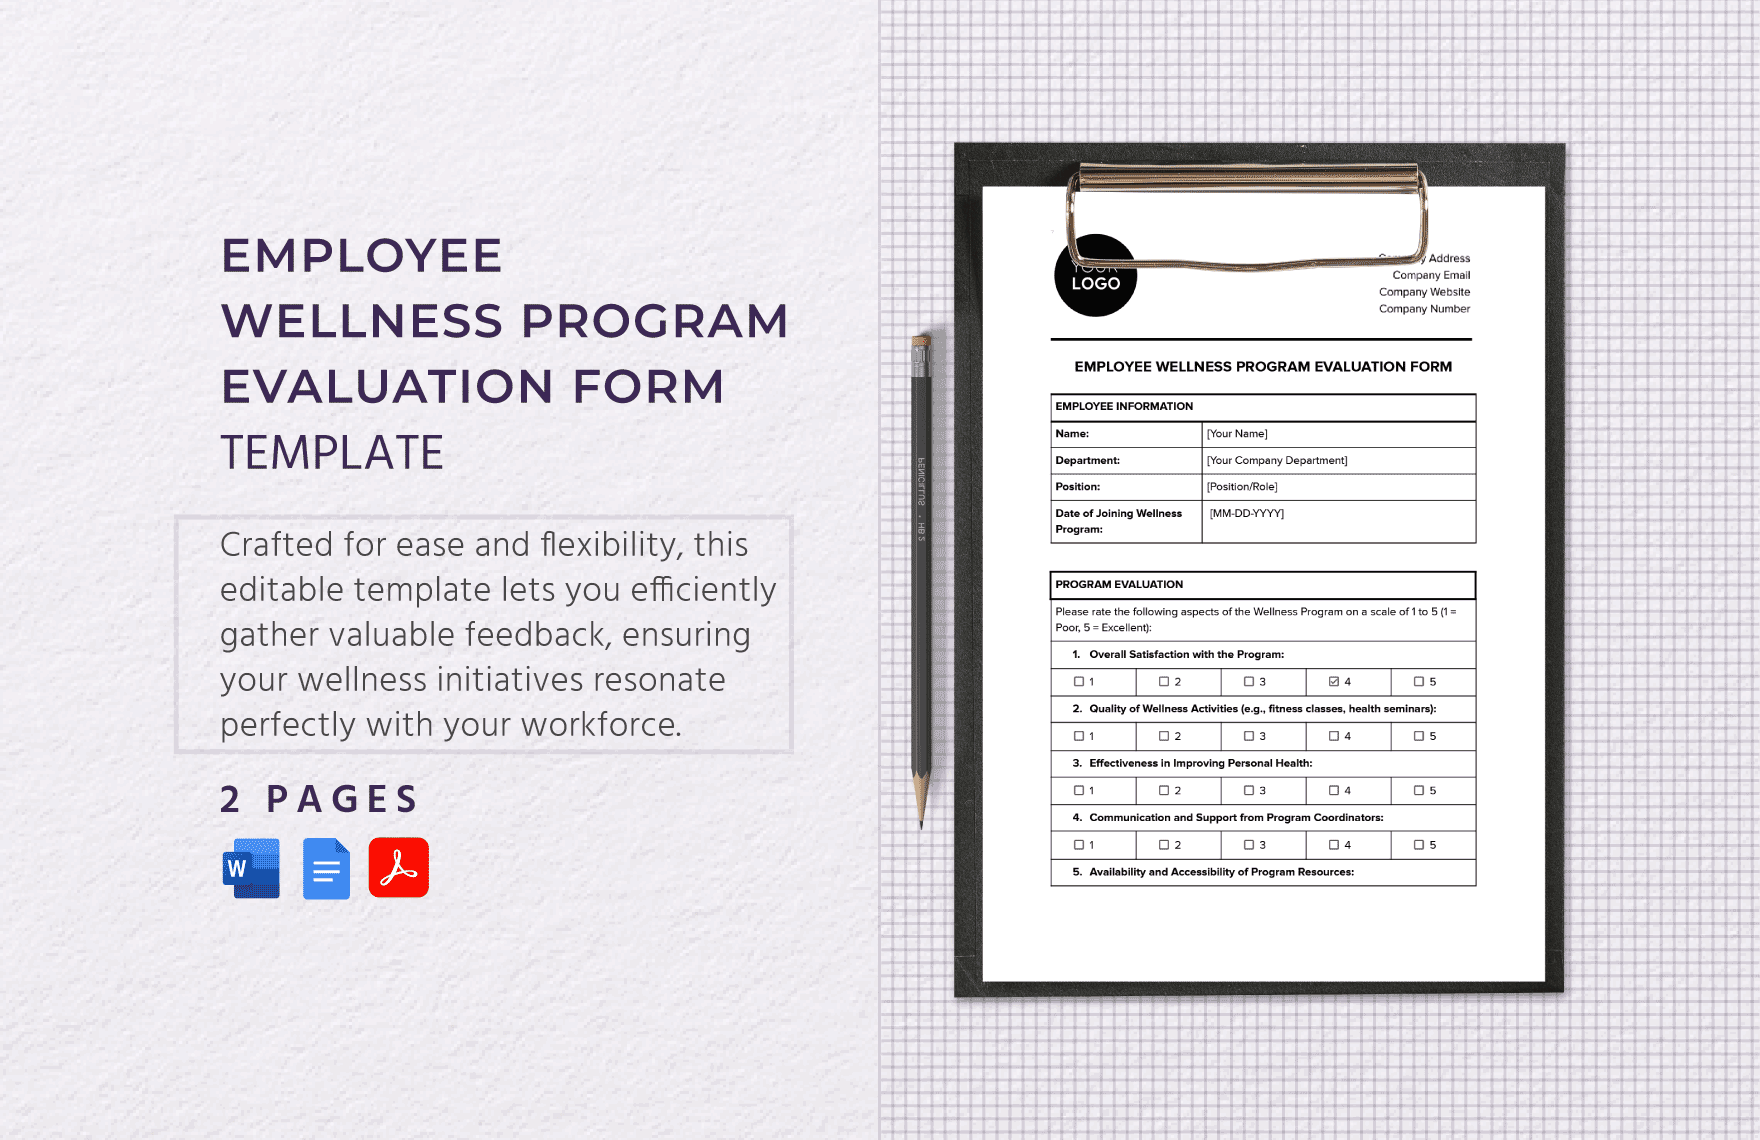 Employee Wellness Program Evaluation Form Template